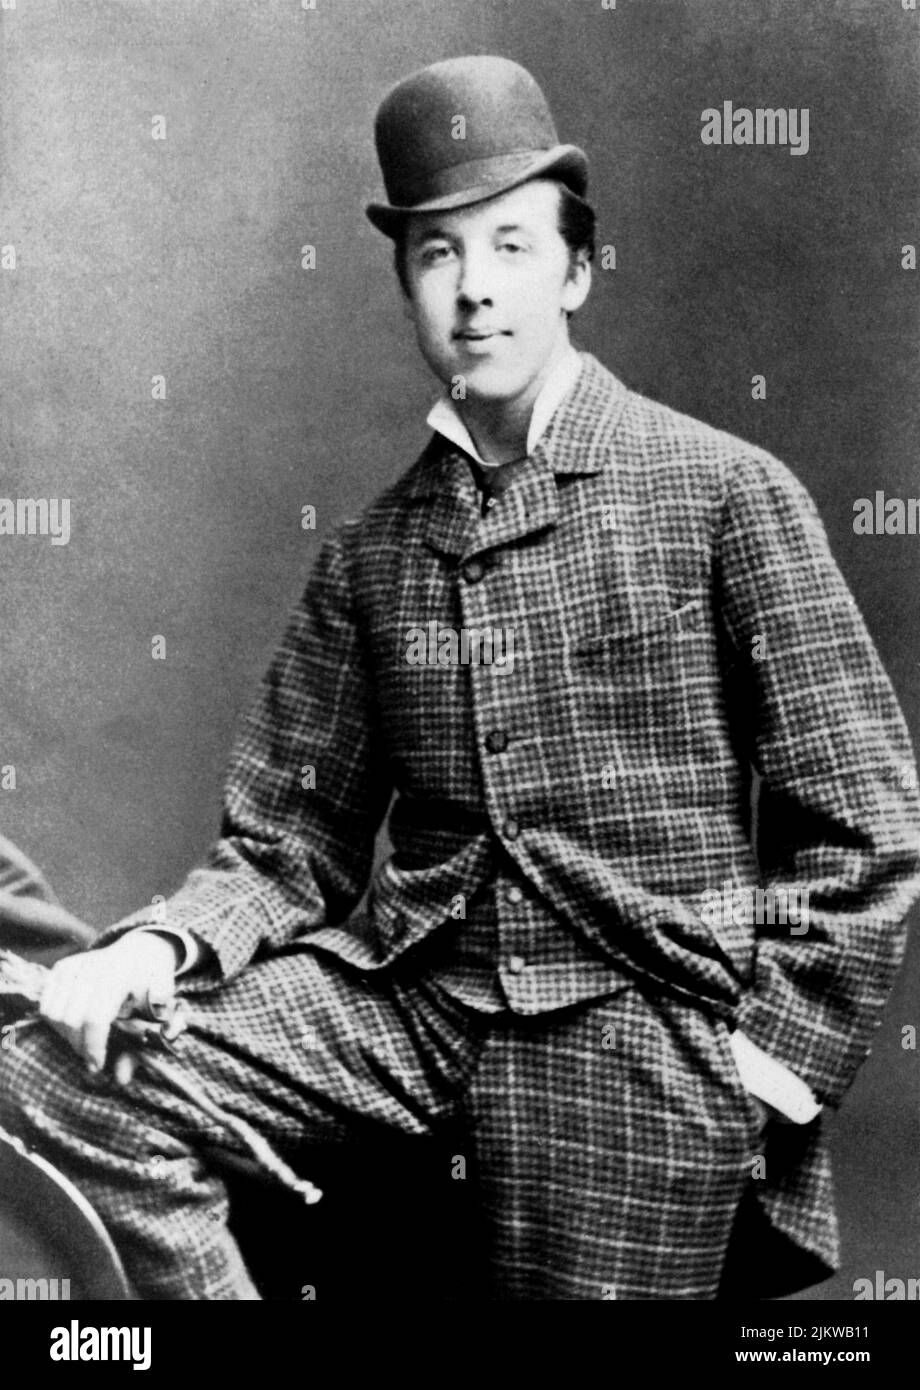 1876 , april , Oxford , England   : The celebrated irish writer and dramatist OSCAR WILDE ( 1854 - 1900 )  - SCRITTORE - LETTERATURA - LITERATURE - POET - POETA - POESIA - DRAMMATURGO - playwriter - play-writer - TEATRO - THEATER - THEATRE  - POETRY  - GAY - HOMOSEXUAL - HOMOSEXUALITY - omosessuale - omosessualità  - derby hat - cappello - bombetta  ----  Archivio GBB Stock Photo